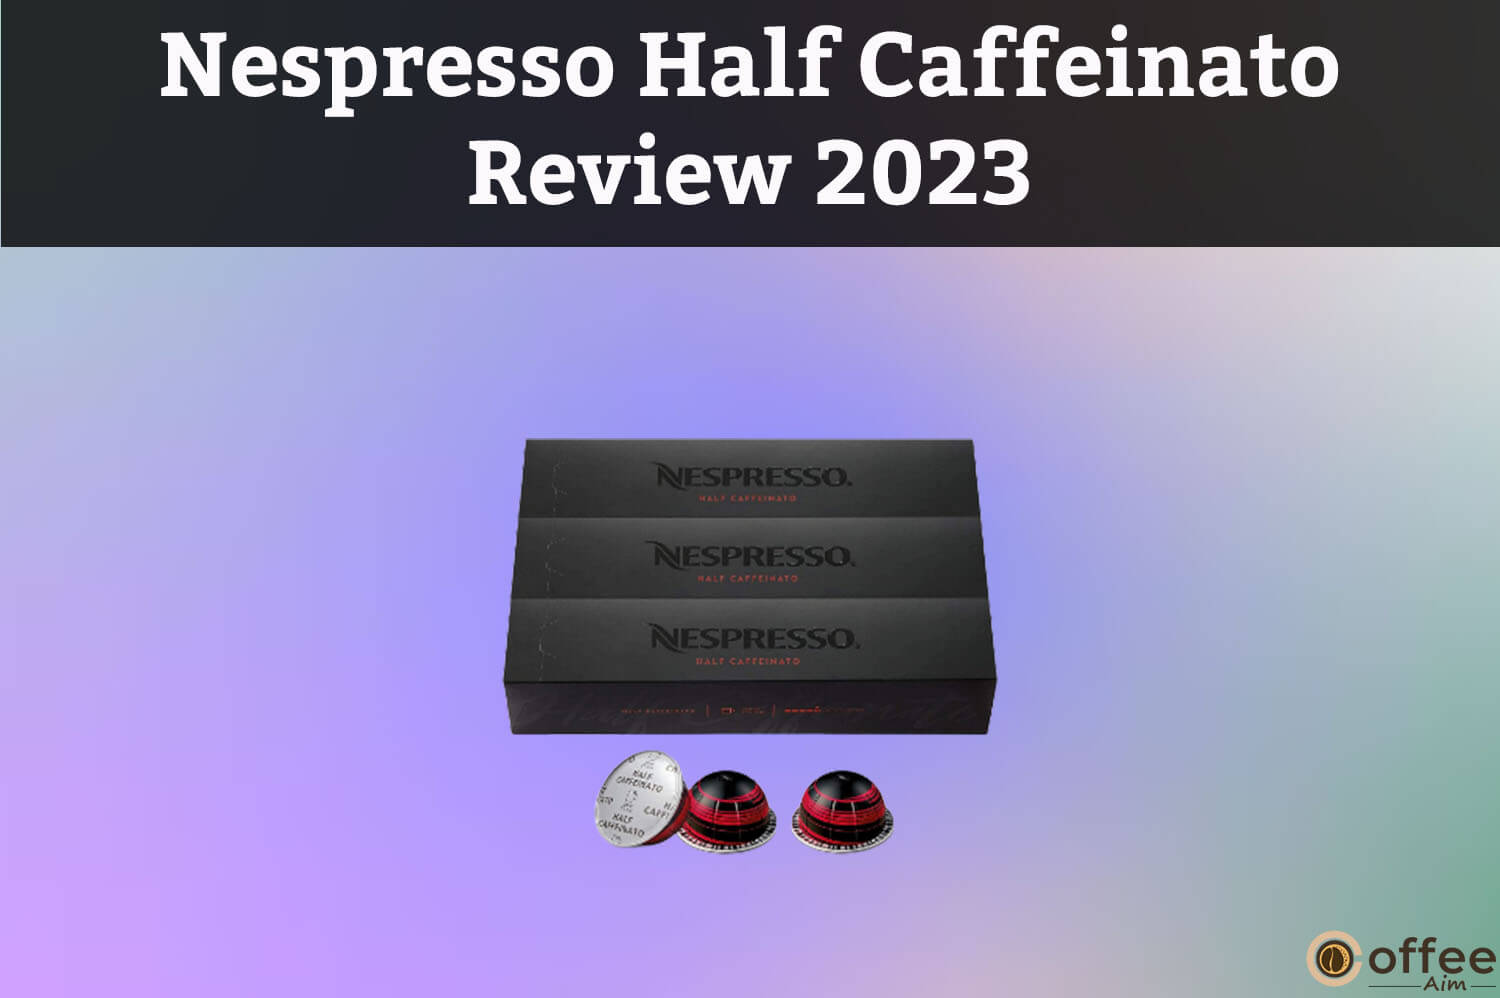 Featured image for the article "Nespresso Half Caffeinato Review 2023"